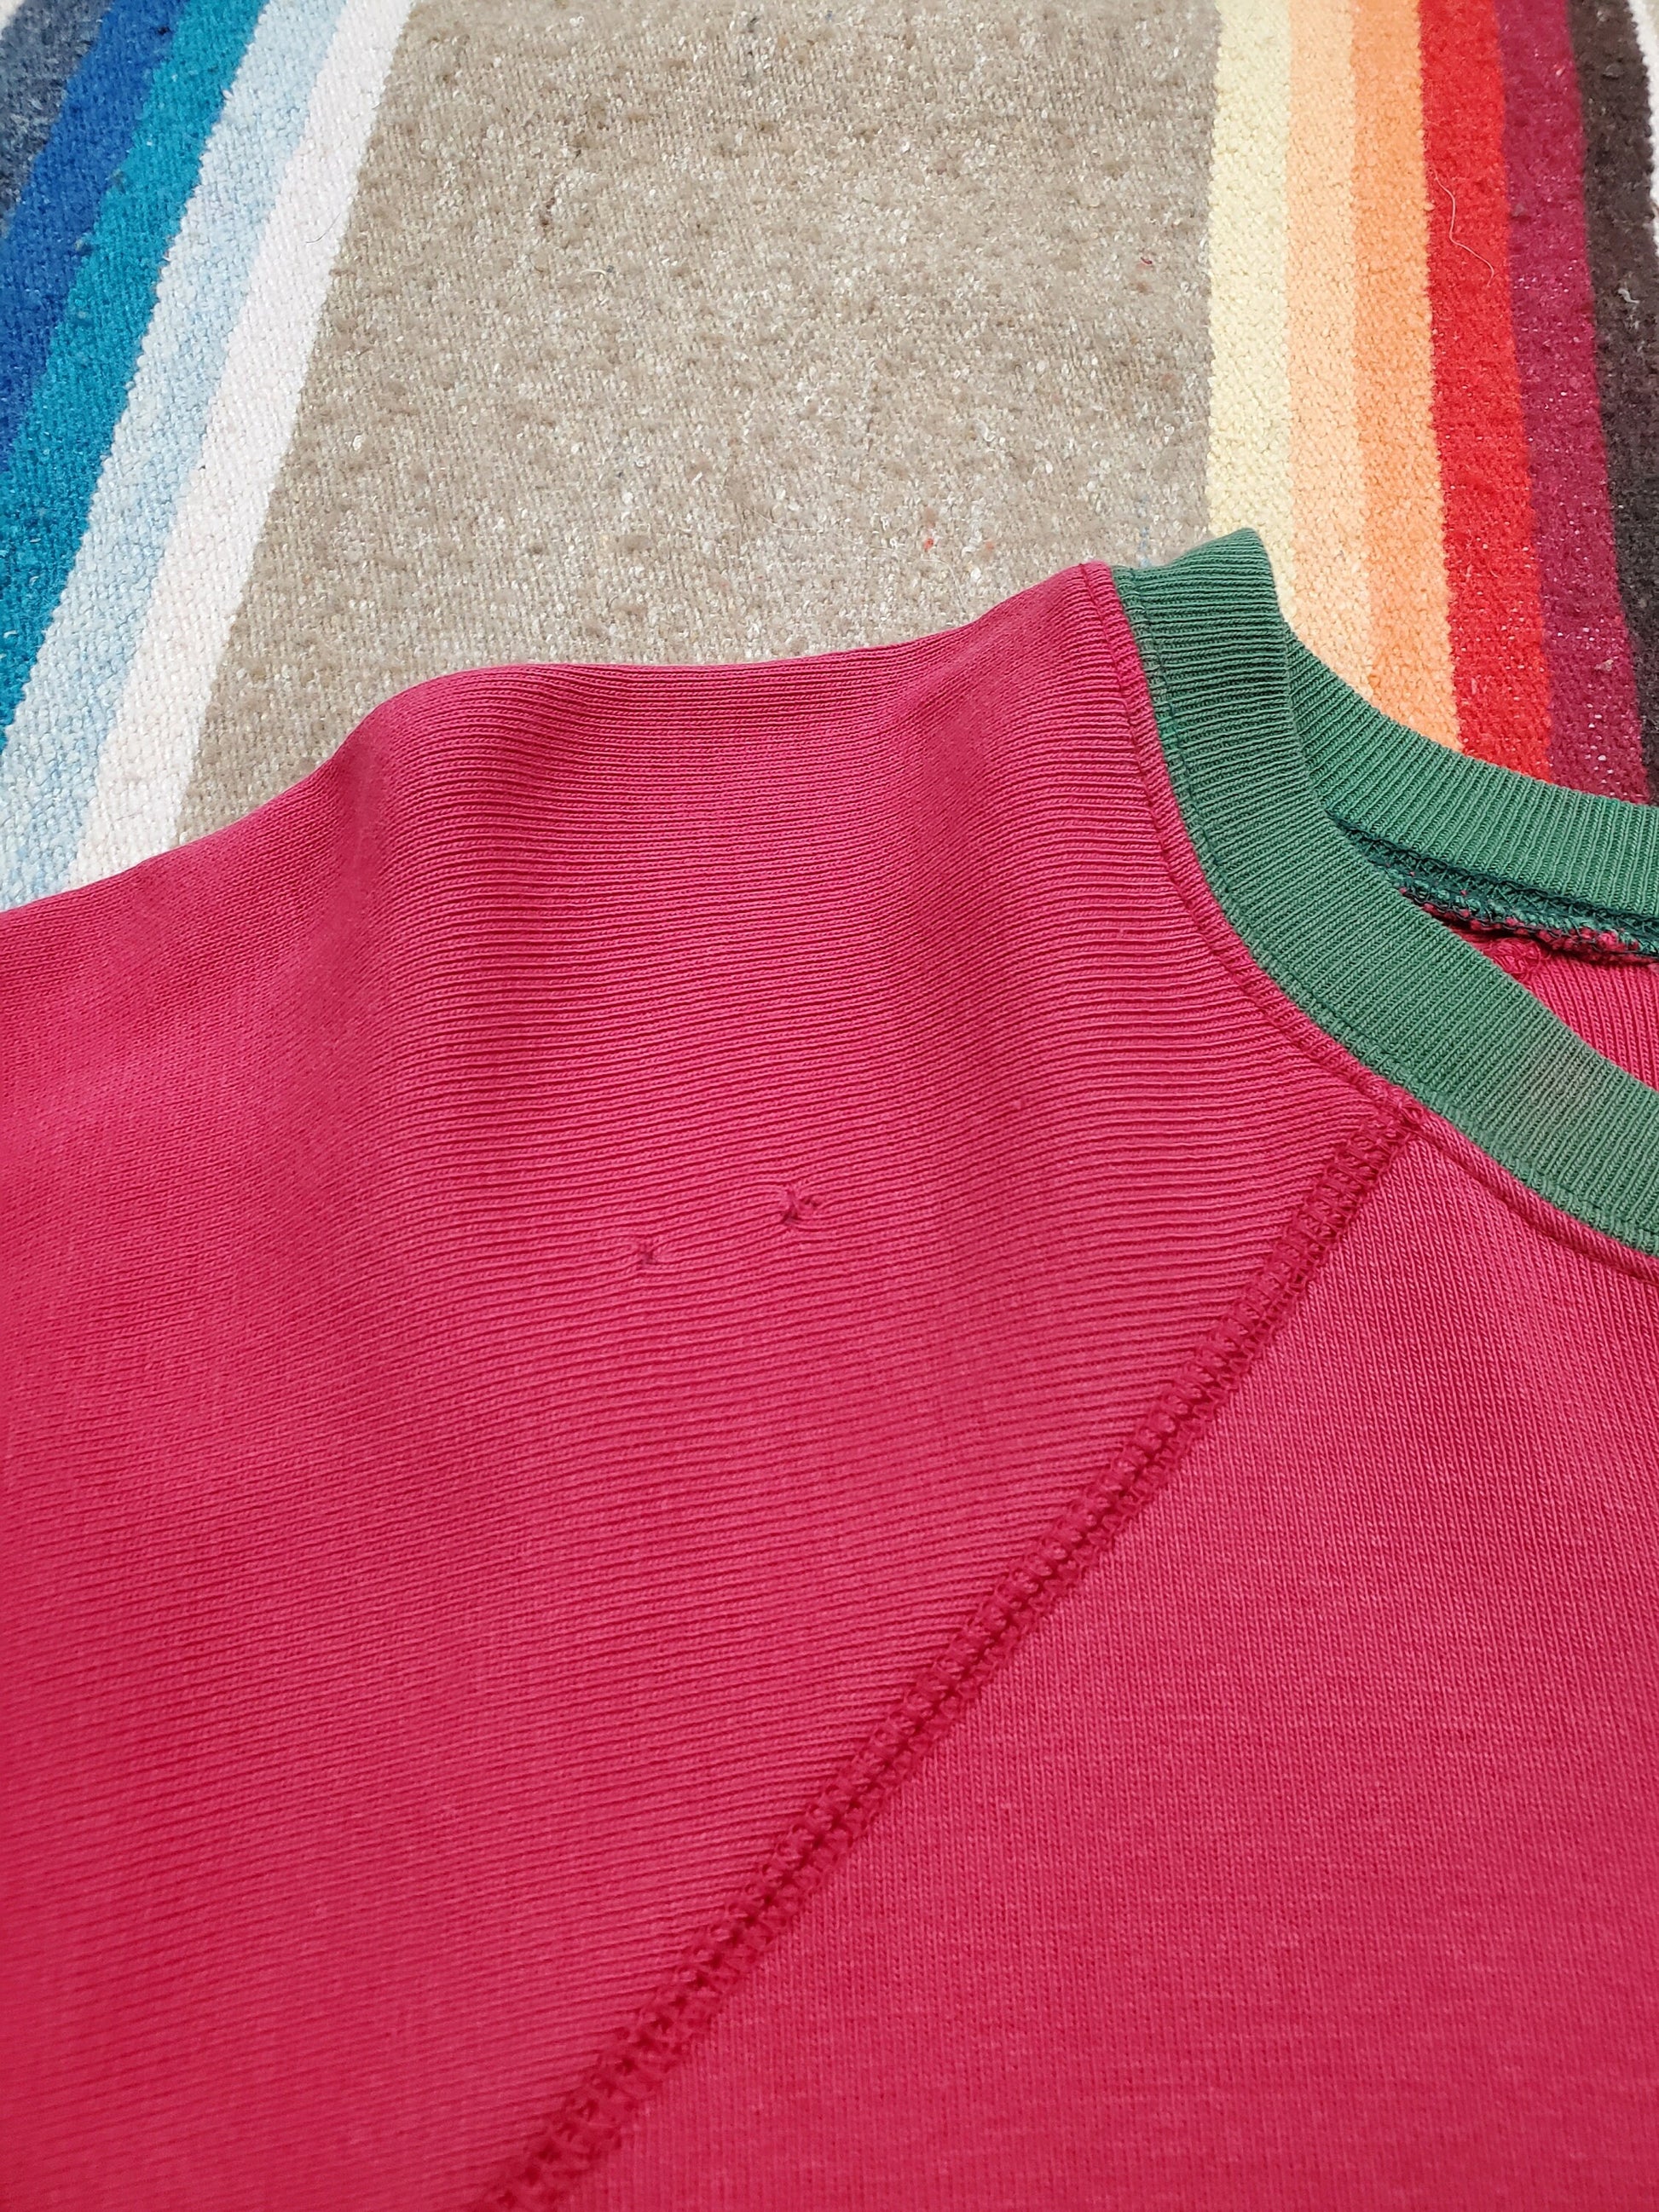 1980s/1990s The Villager Red Blank Raglan Sweatshirt Size S/M